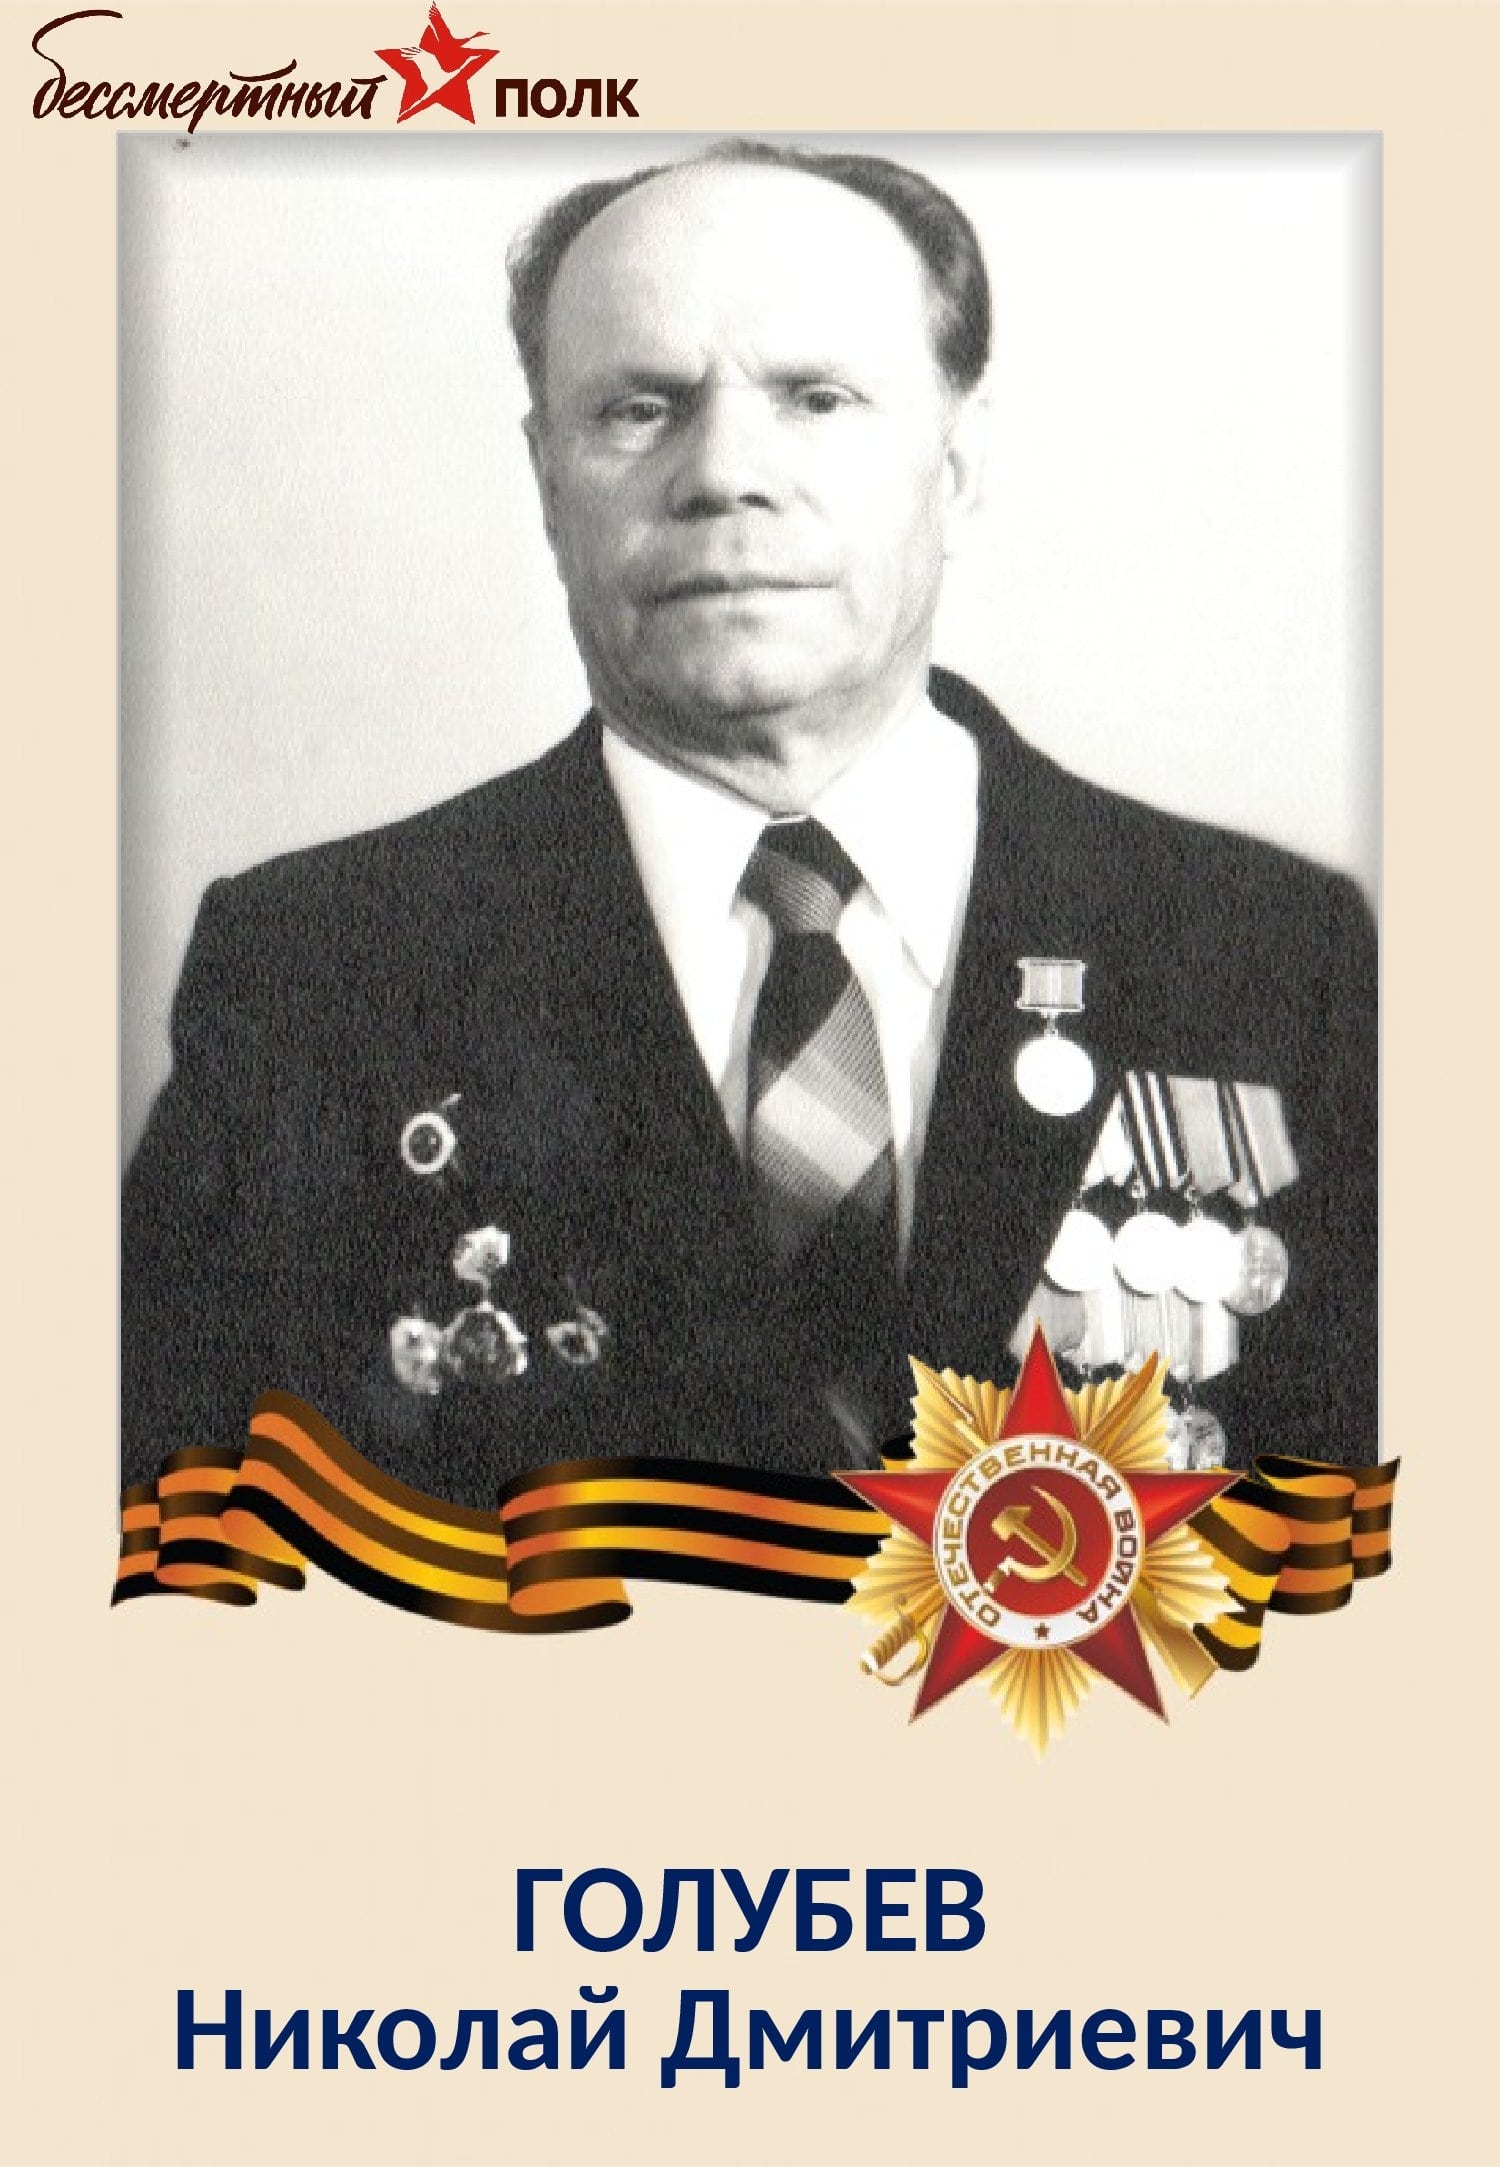 ГОЛУБЕВ Николай Дмитриевич